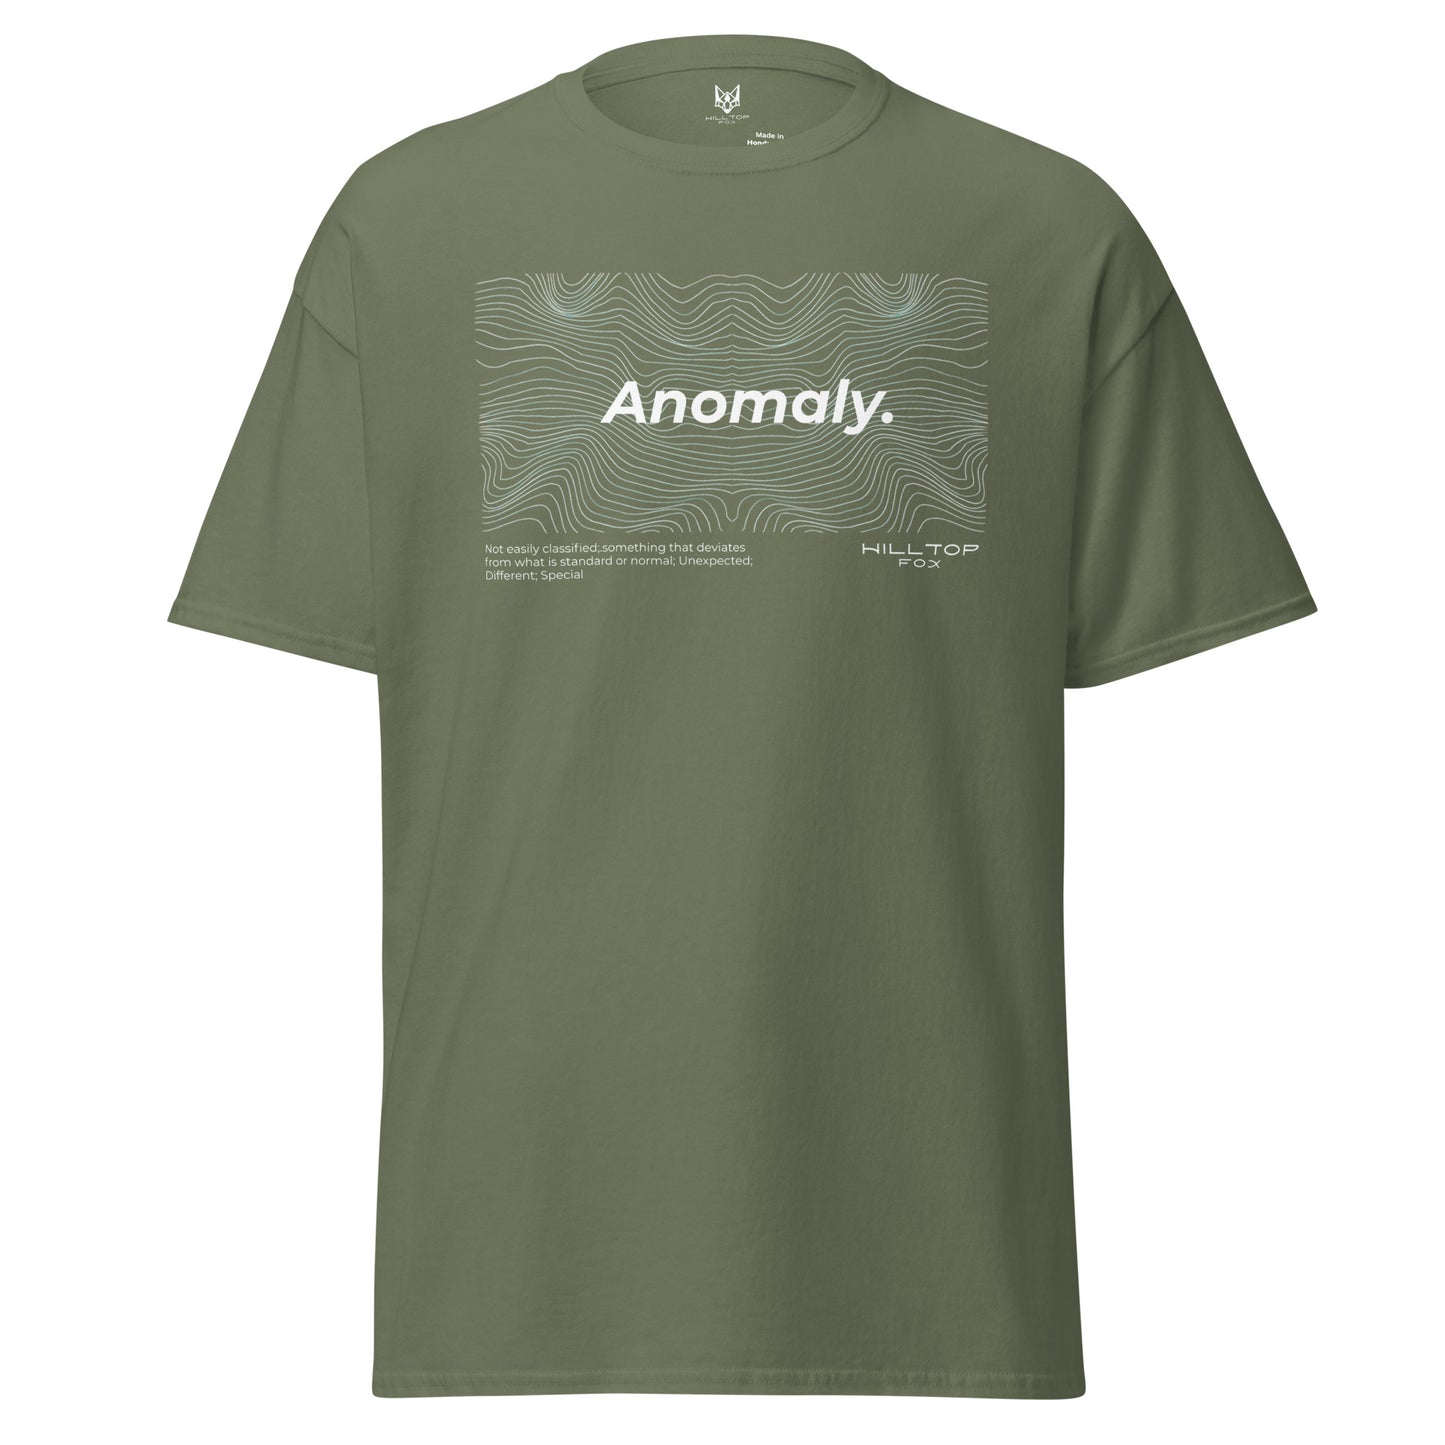 T-shirt d'anomalie